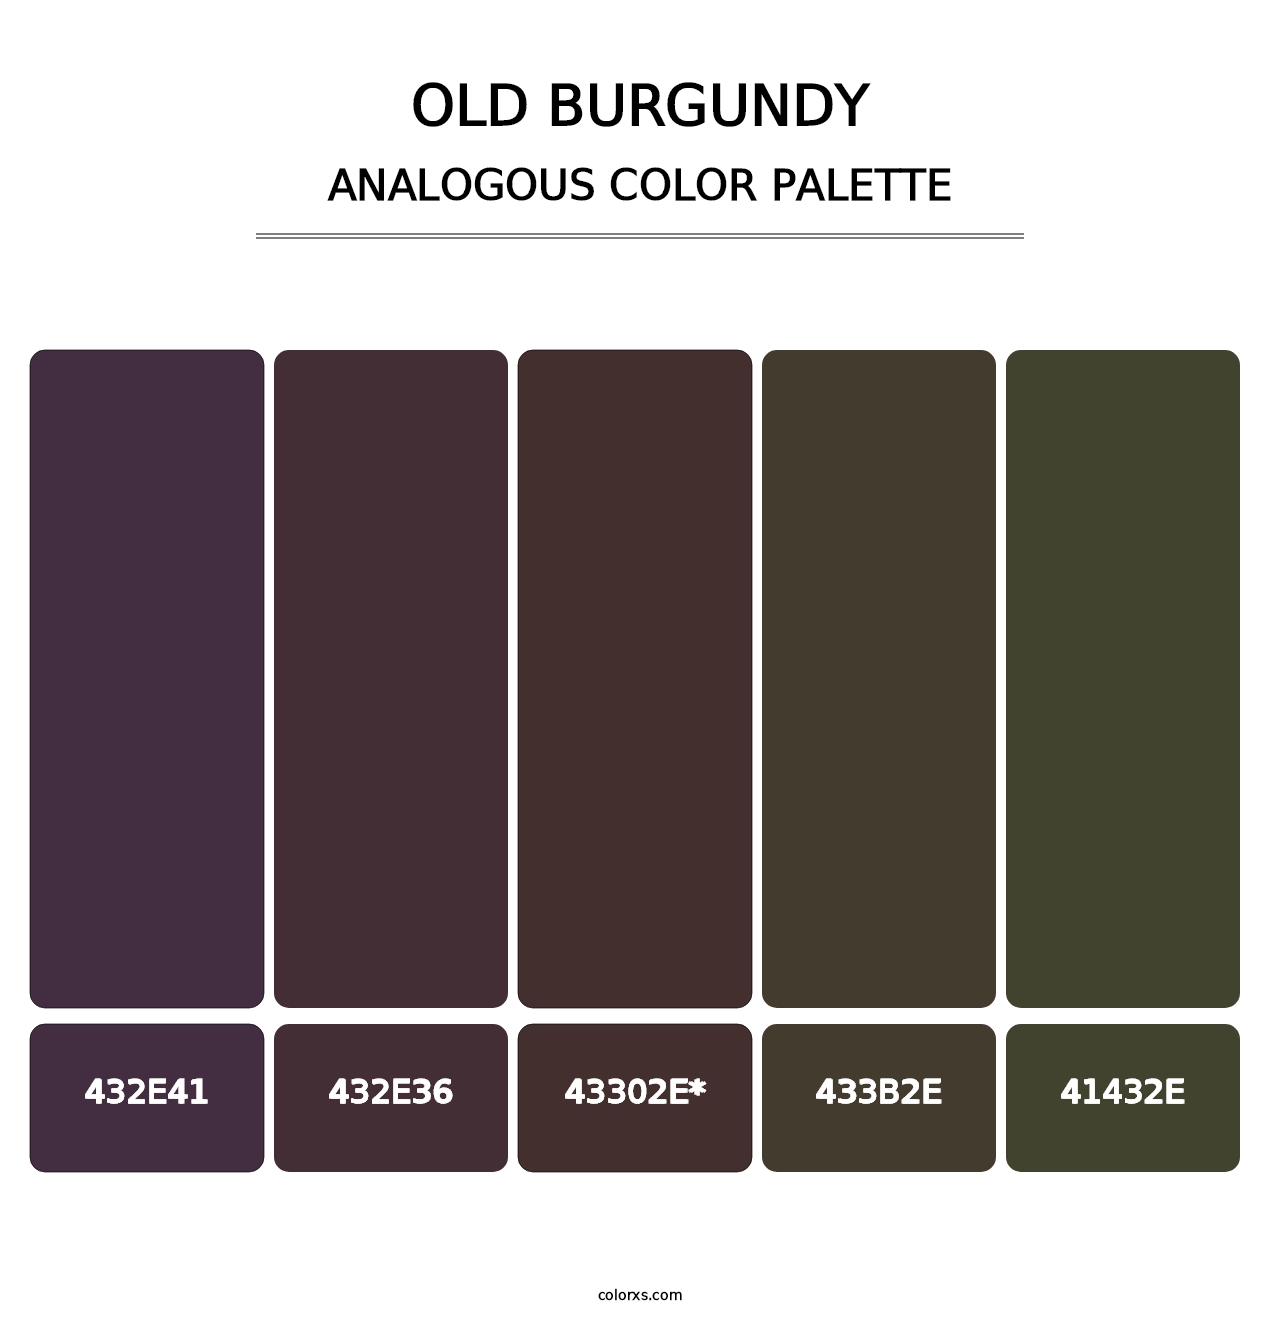 Old Burgundy - Analogous Color Palette